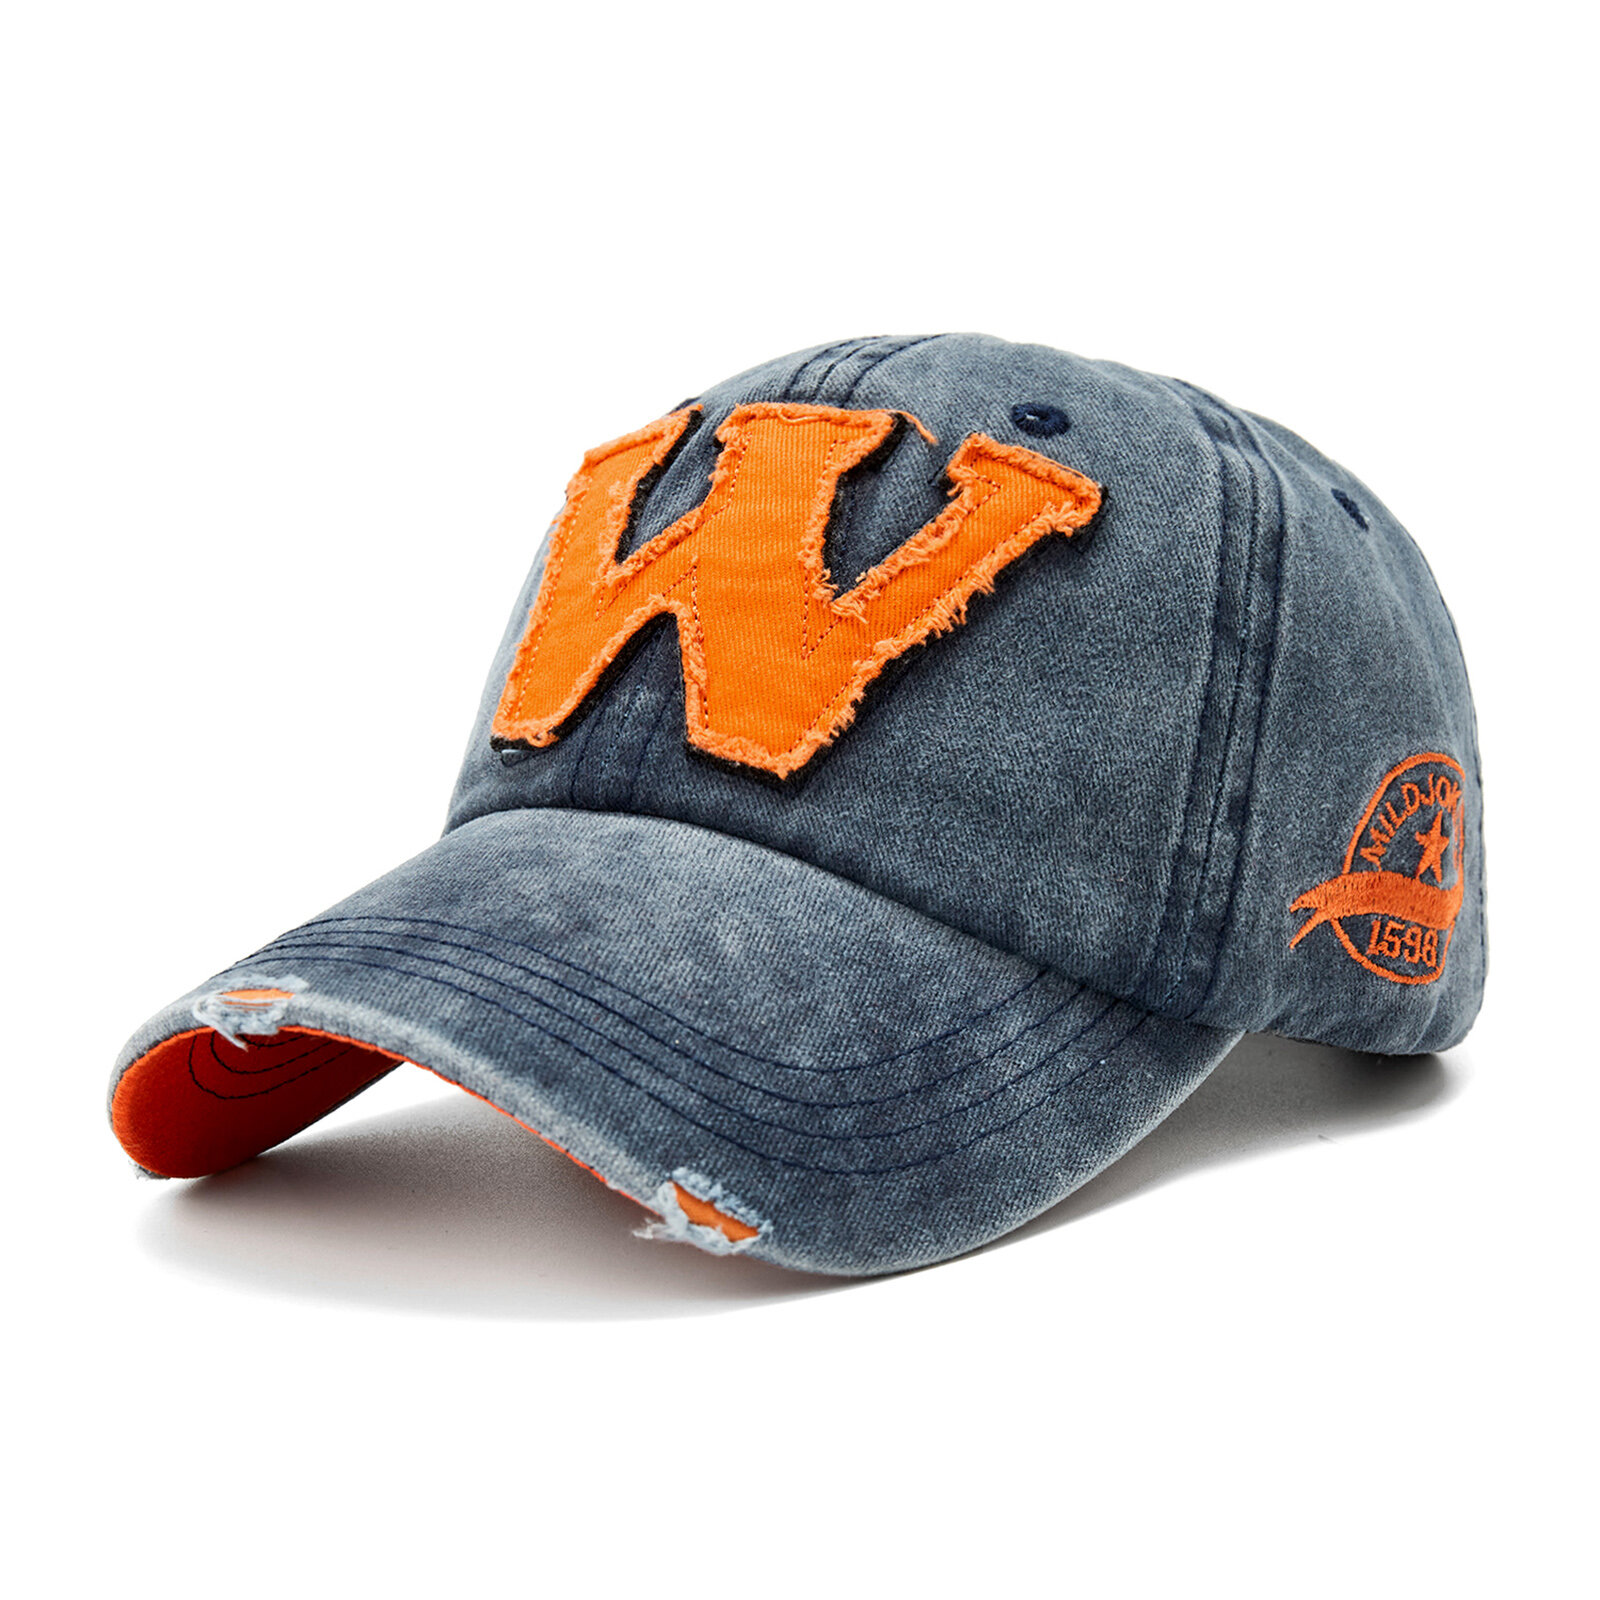 Menico MenCotton W Letter Embroidery Fashion Casual Wild Adjustable Outdoor Sunscreen Sun Hat Baseball Hat